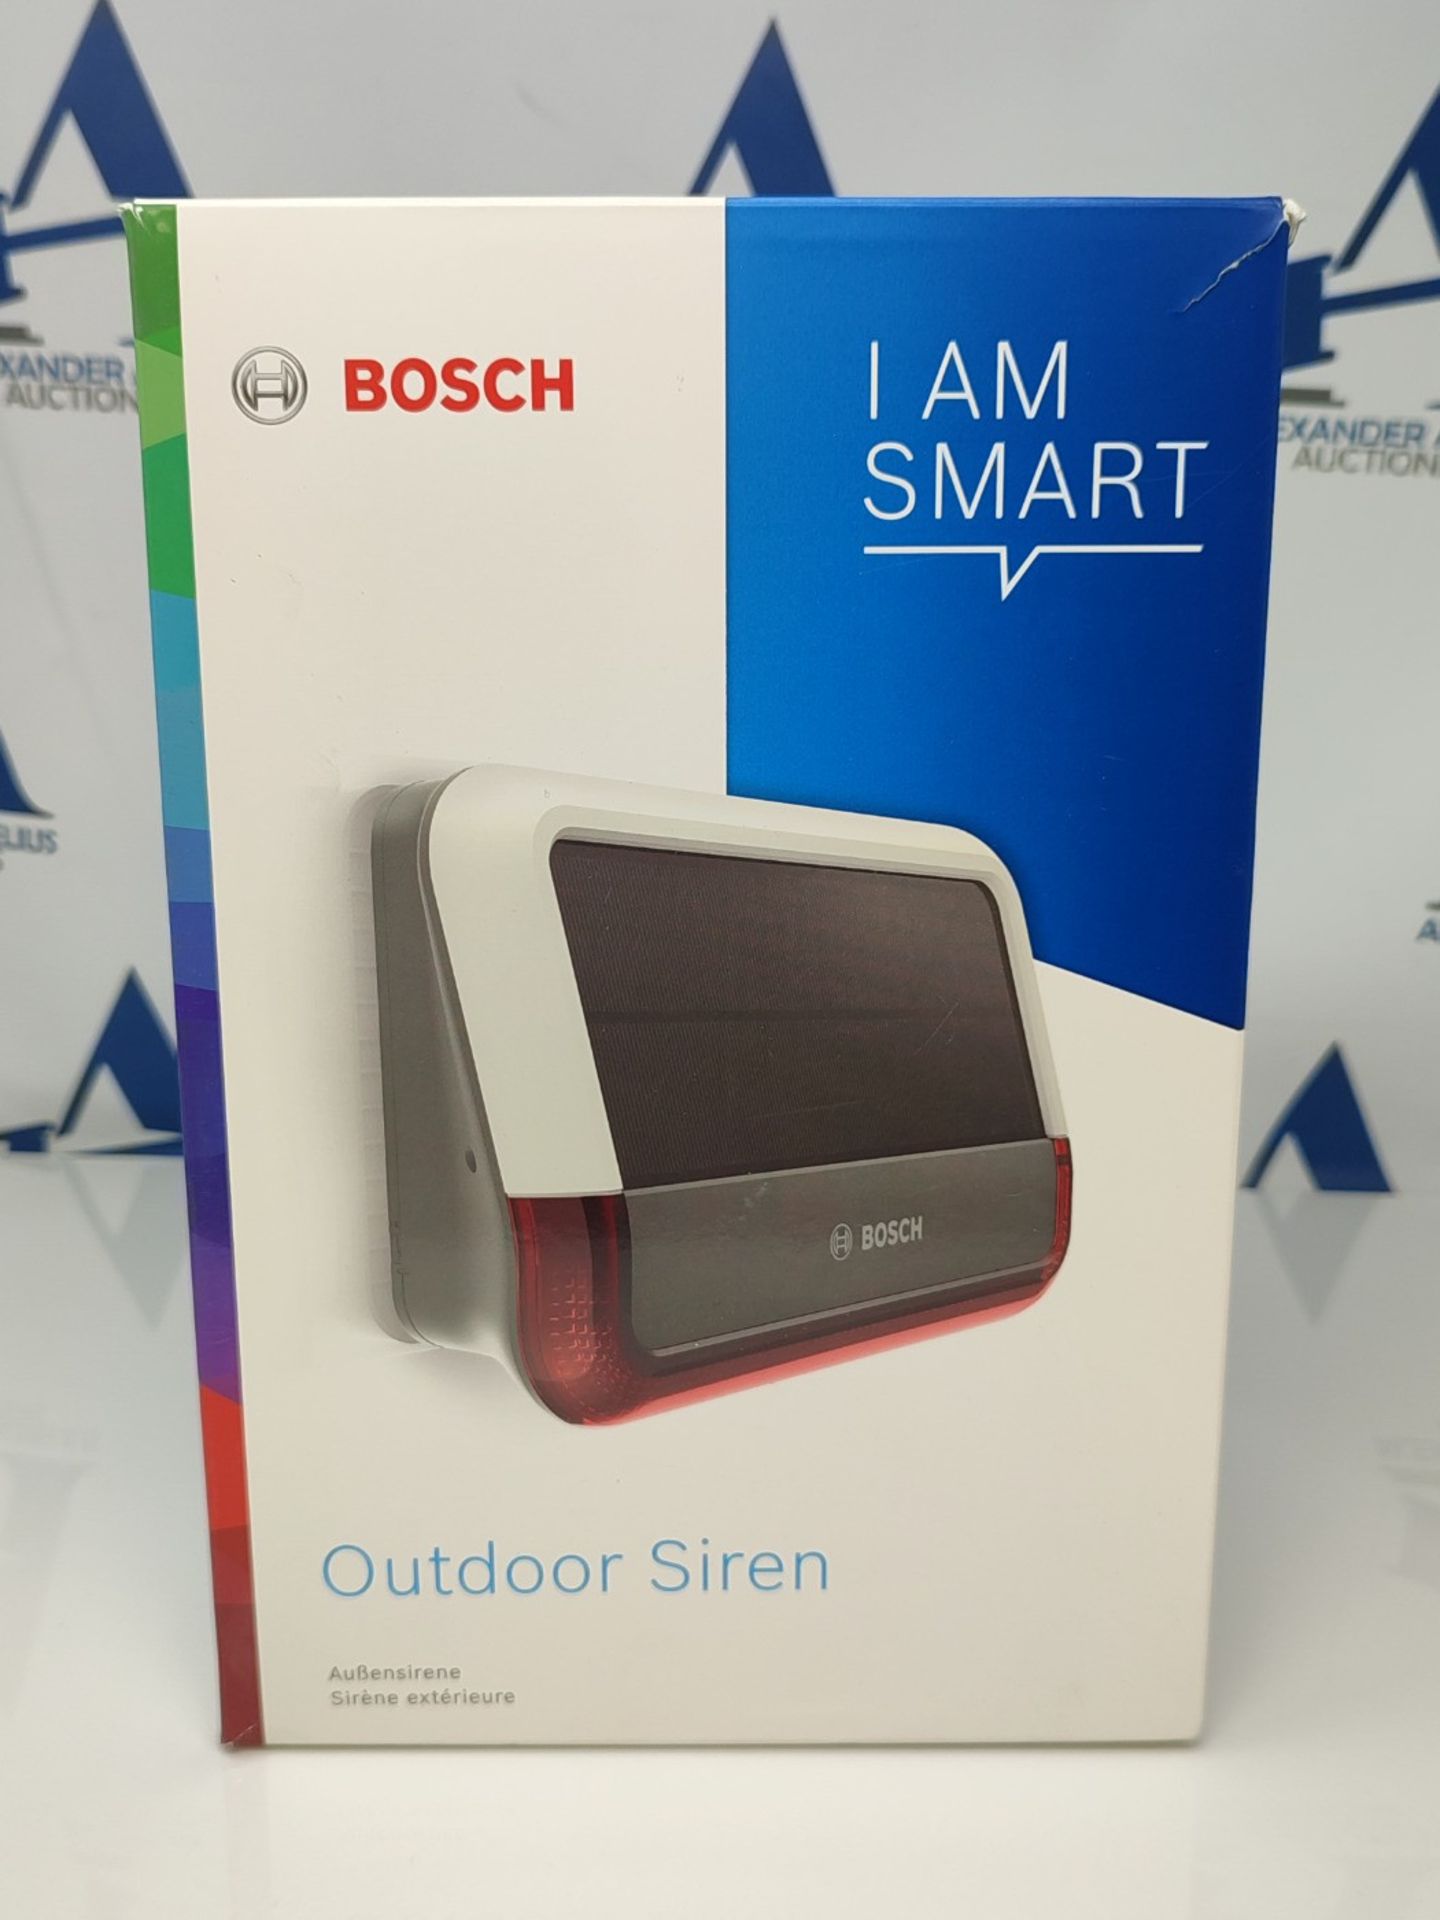 RRP £201.00 Bosch Smart Home - External siren, wireless alarm system with solar panel, alert via n - Image 2 of 3